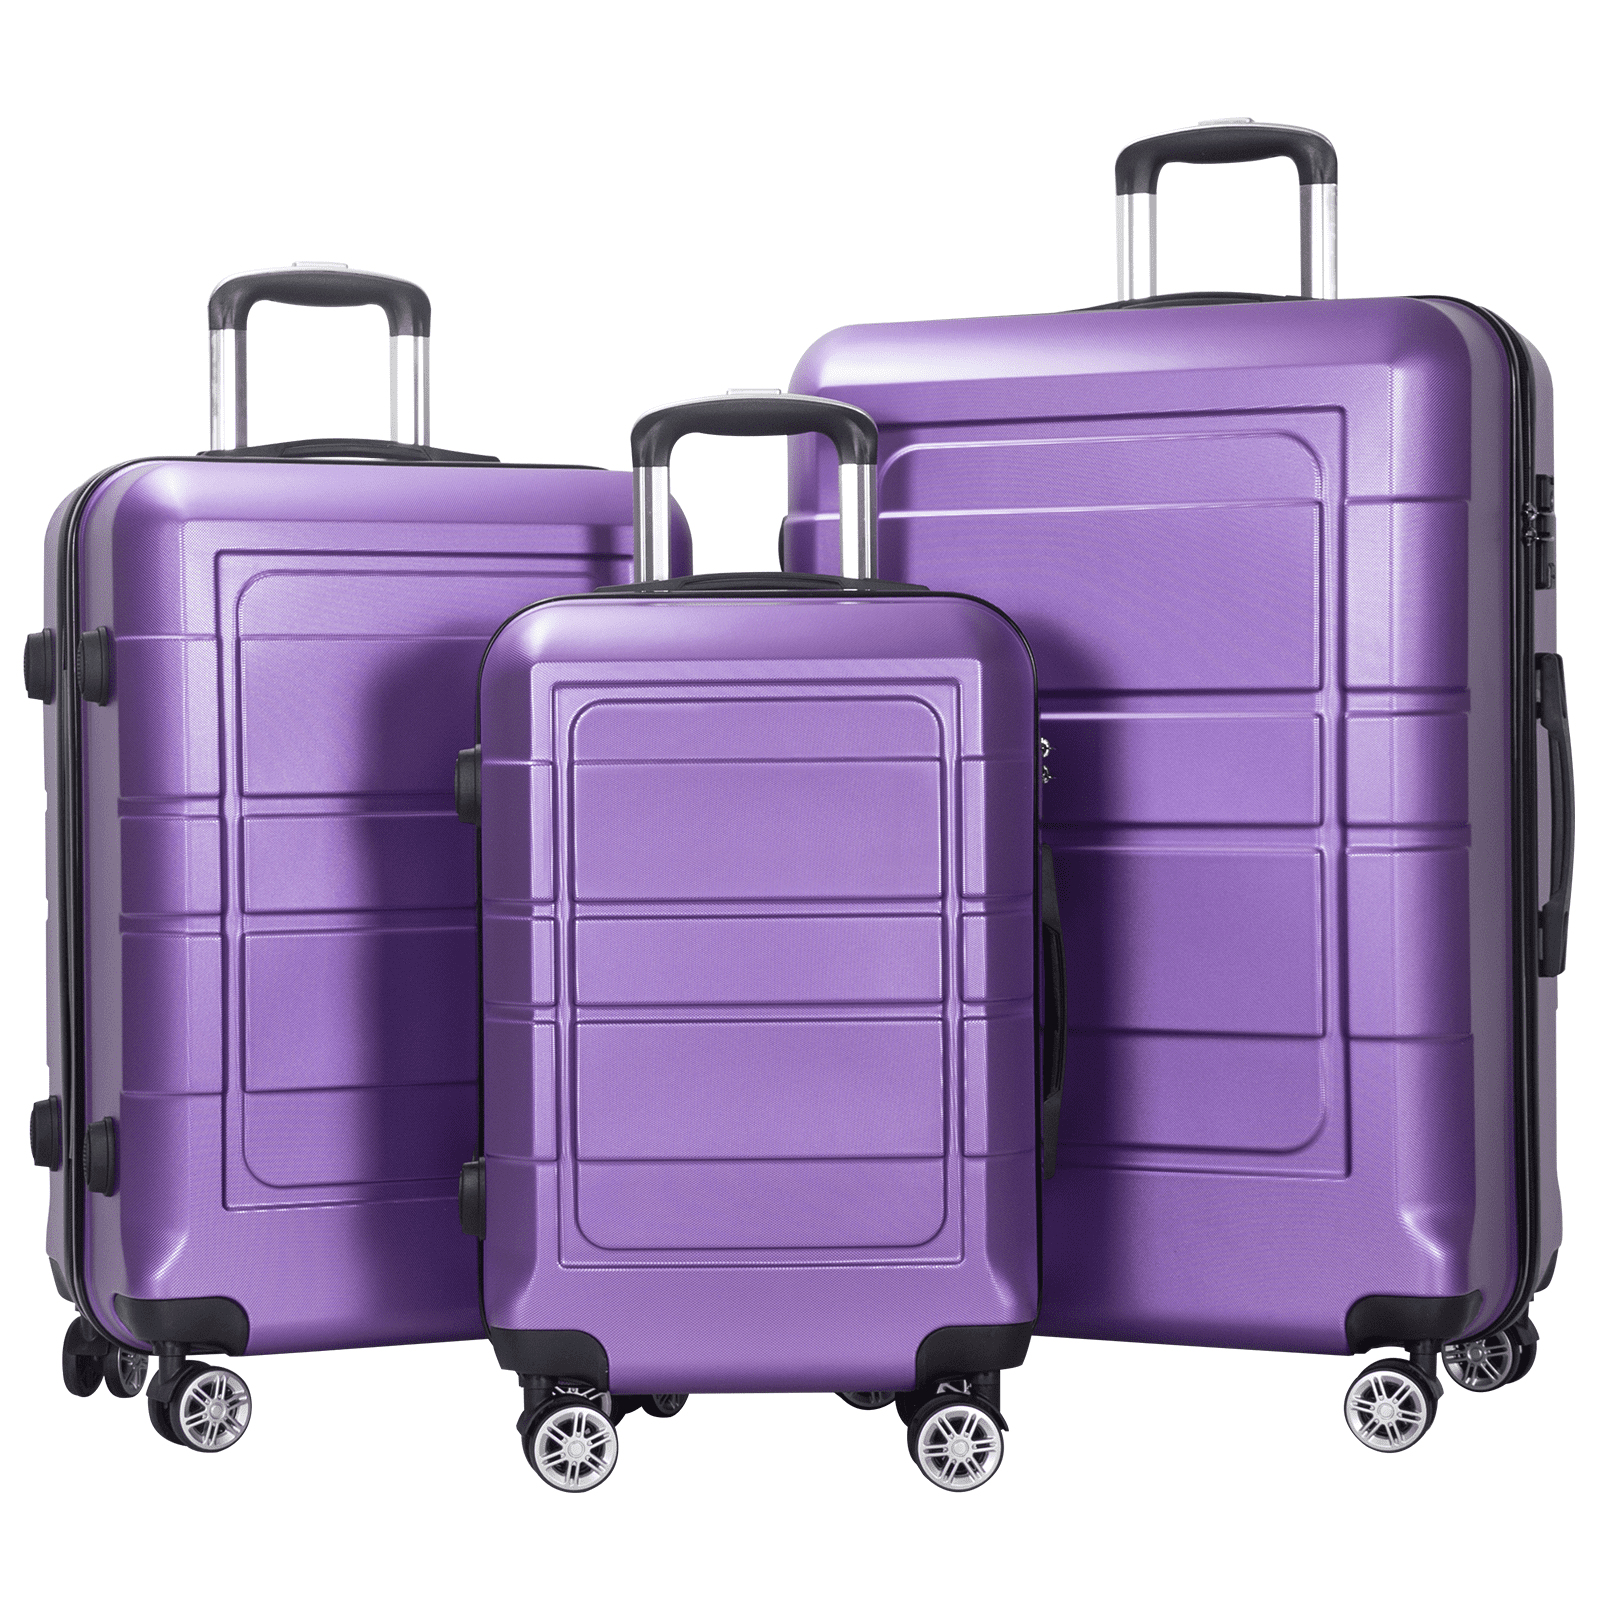 AEDILYS 3 Pcs Hardside Luggage Set, with TSA Lock and 20'/24'/28' Luggage Bags, Purple